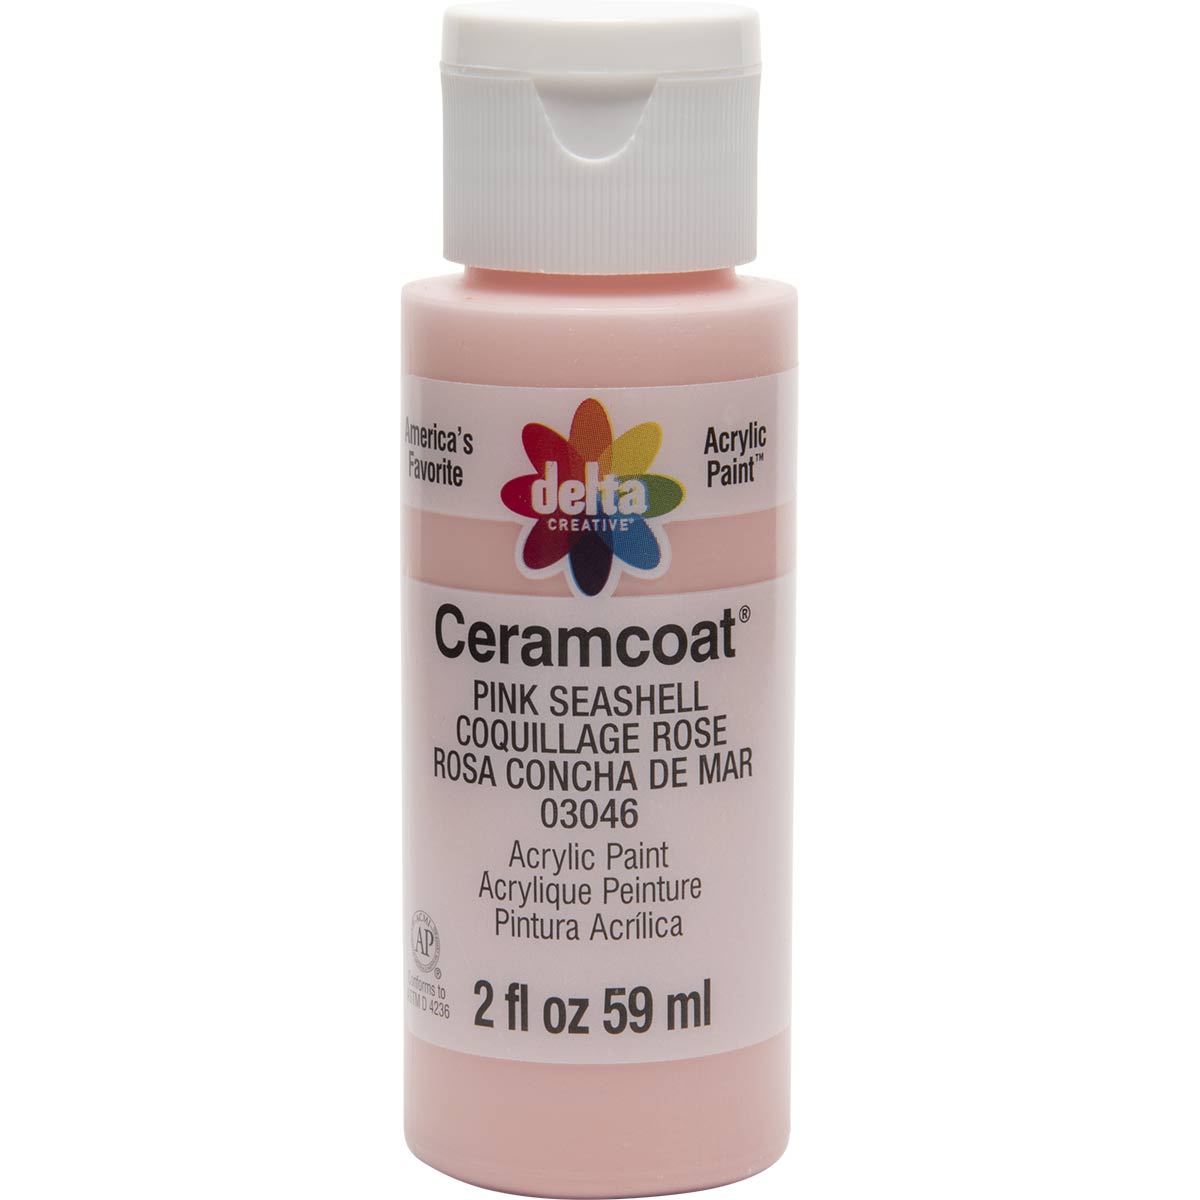 Delta Ceramcoat Acrylic Paint - Pink Seashell, 2 oz. - 03046